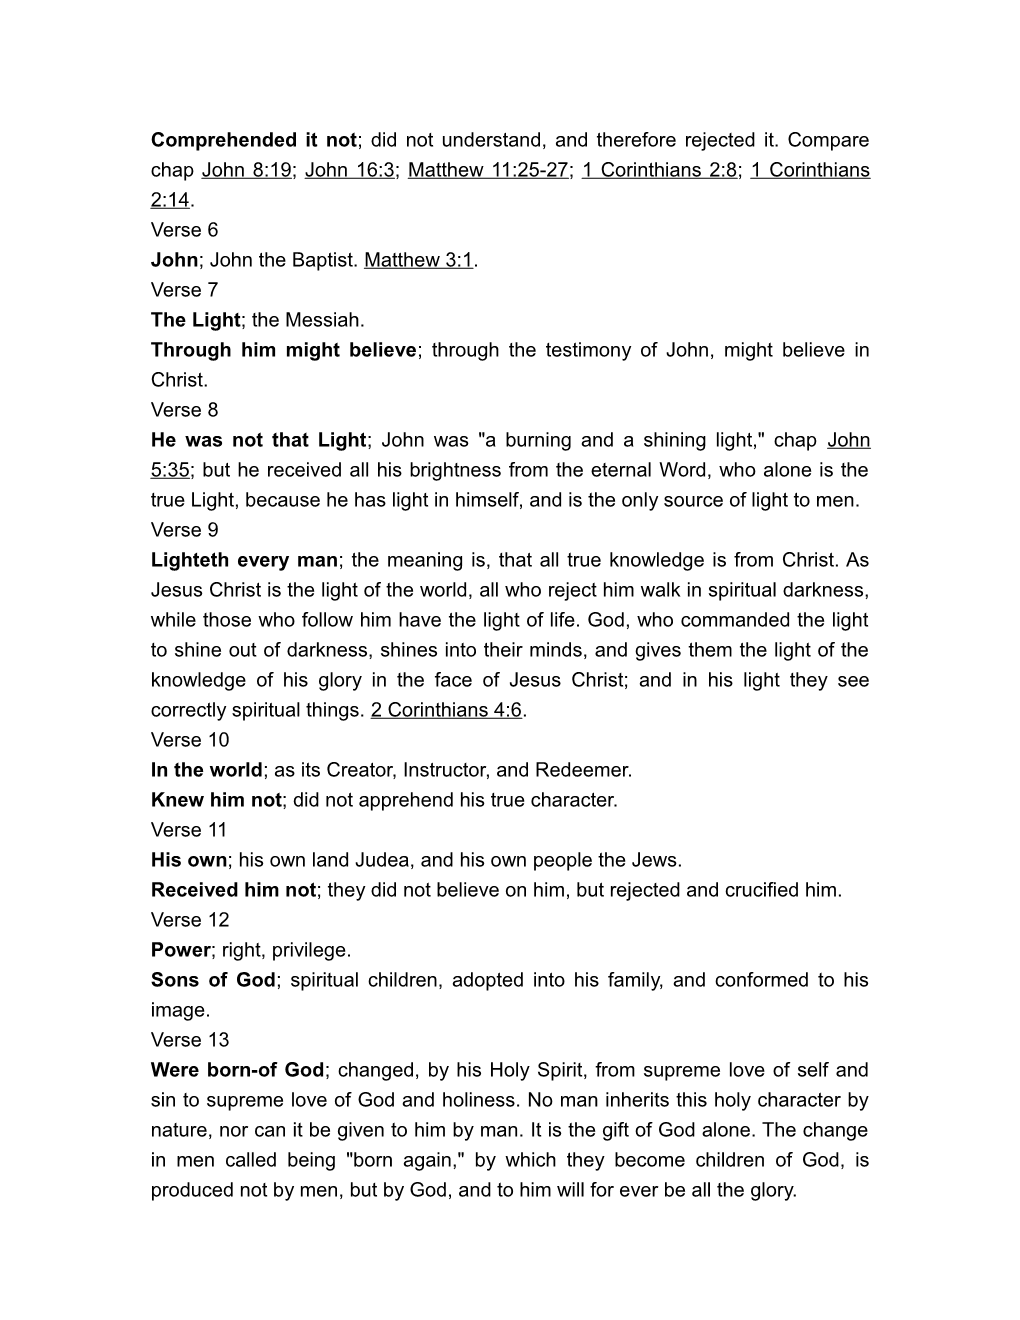 Edward S Family Bible New Testament Notes - John (Justin Edward)